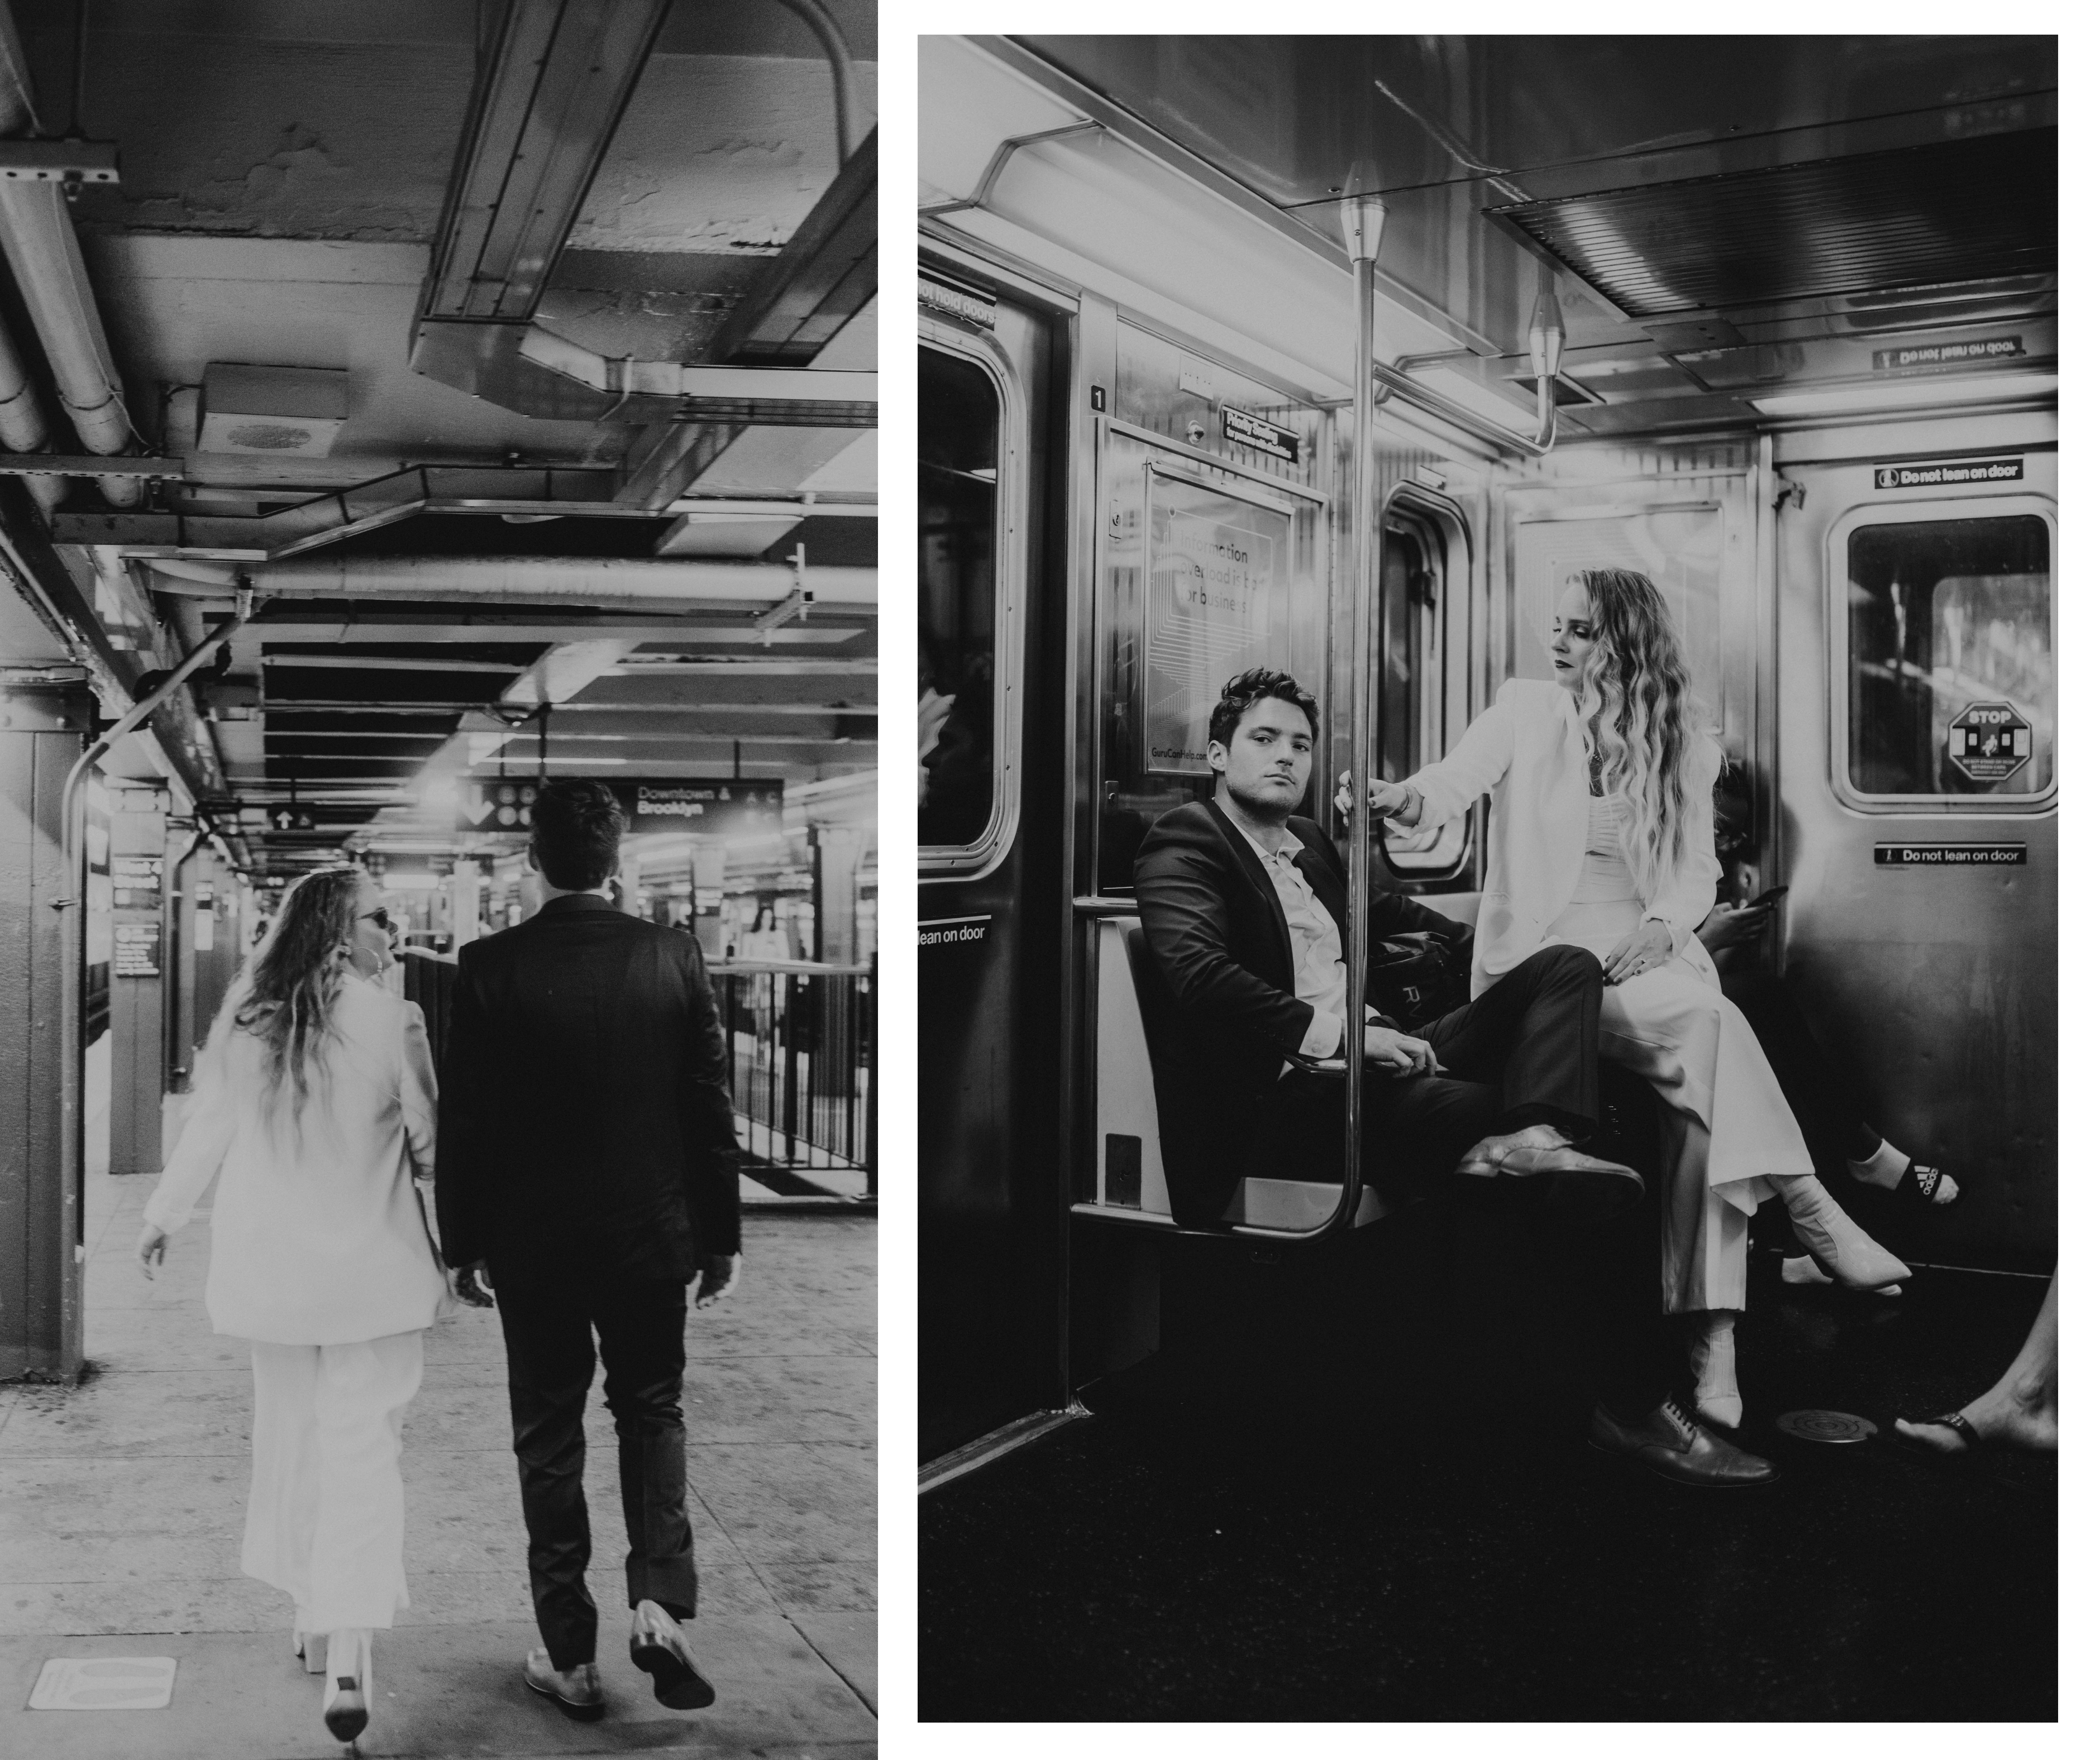 Engagement photos in New York City subways